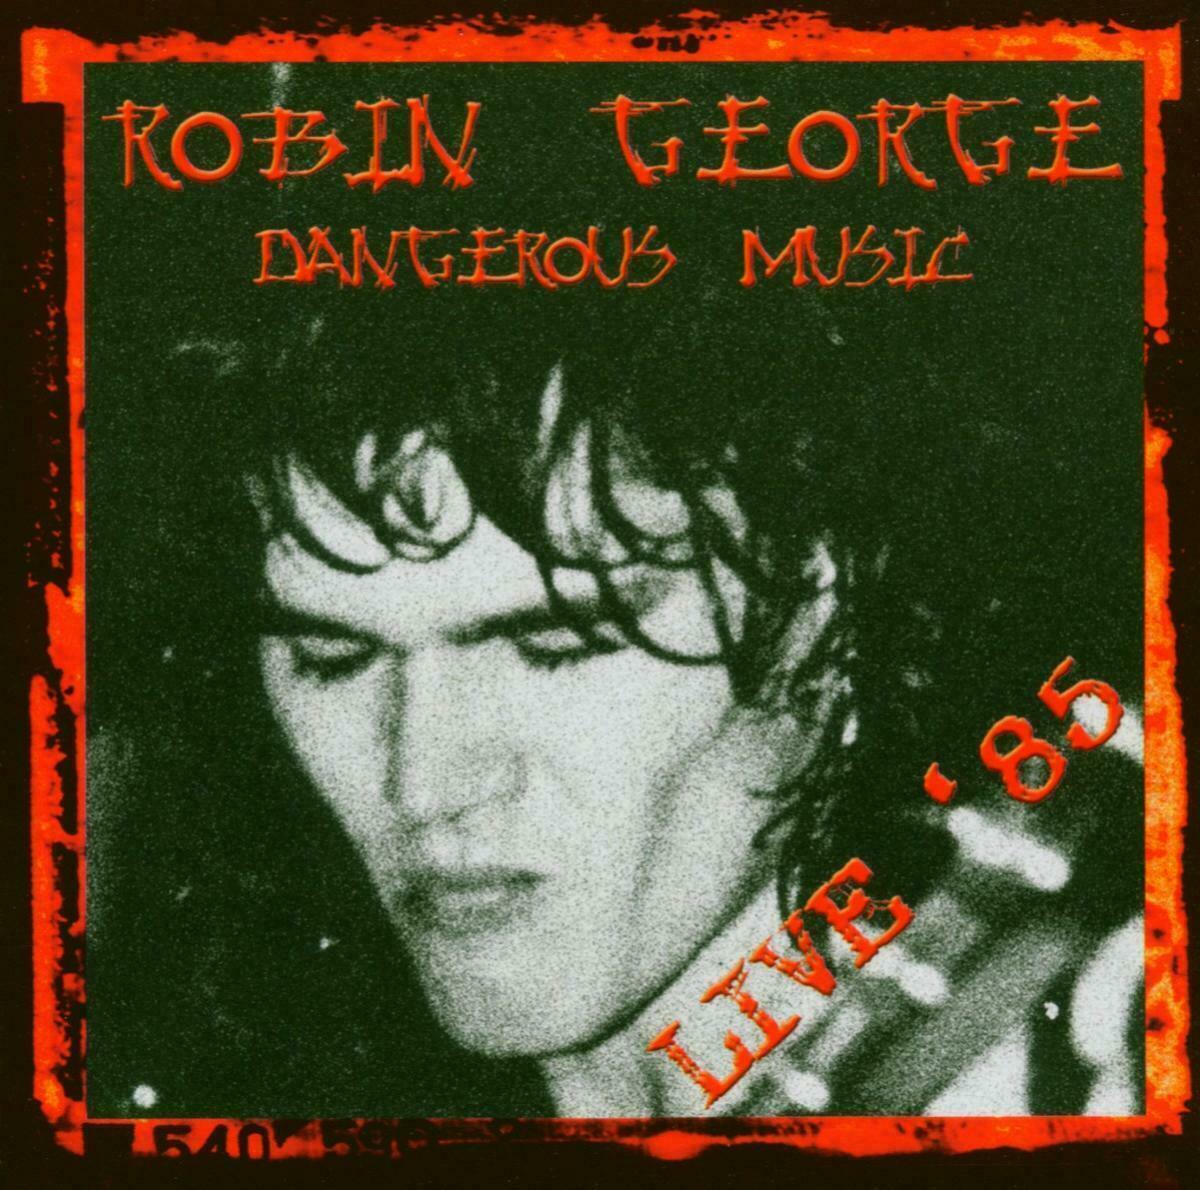 Robin George - Dangerous Music Live '85 CD 2004